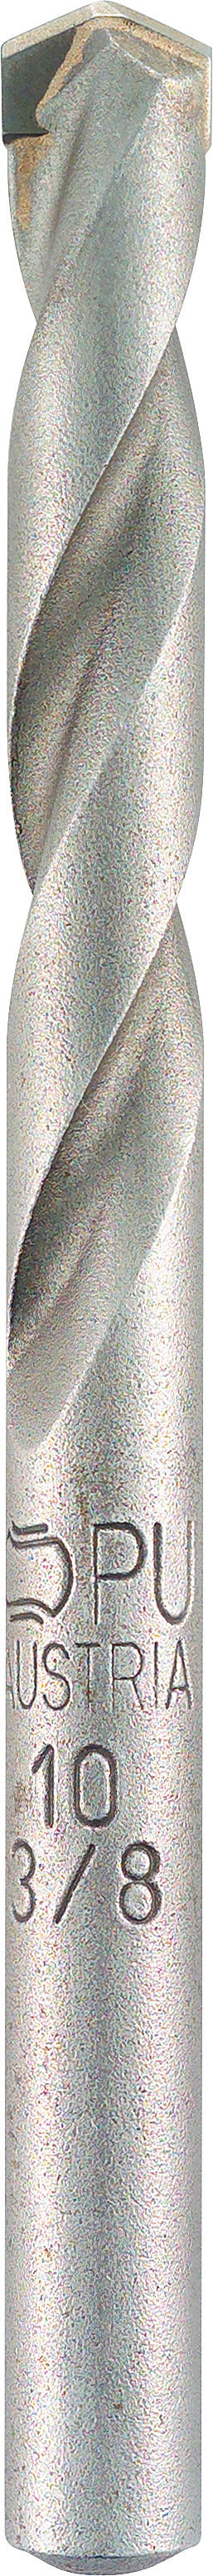 alpen-masonry-drill-bit-long-life-8.0-x-150mm-alp71808-1